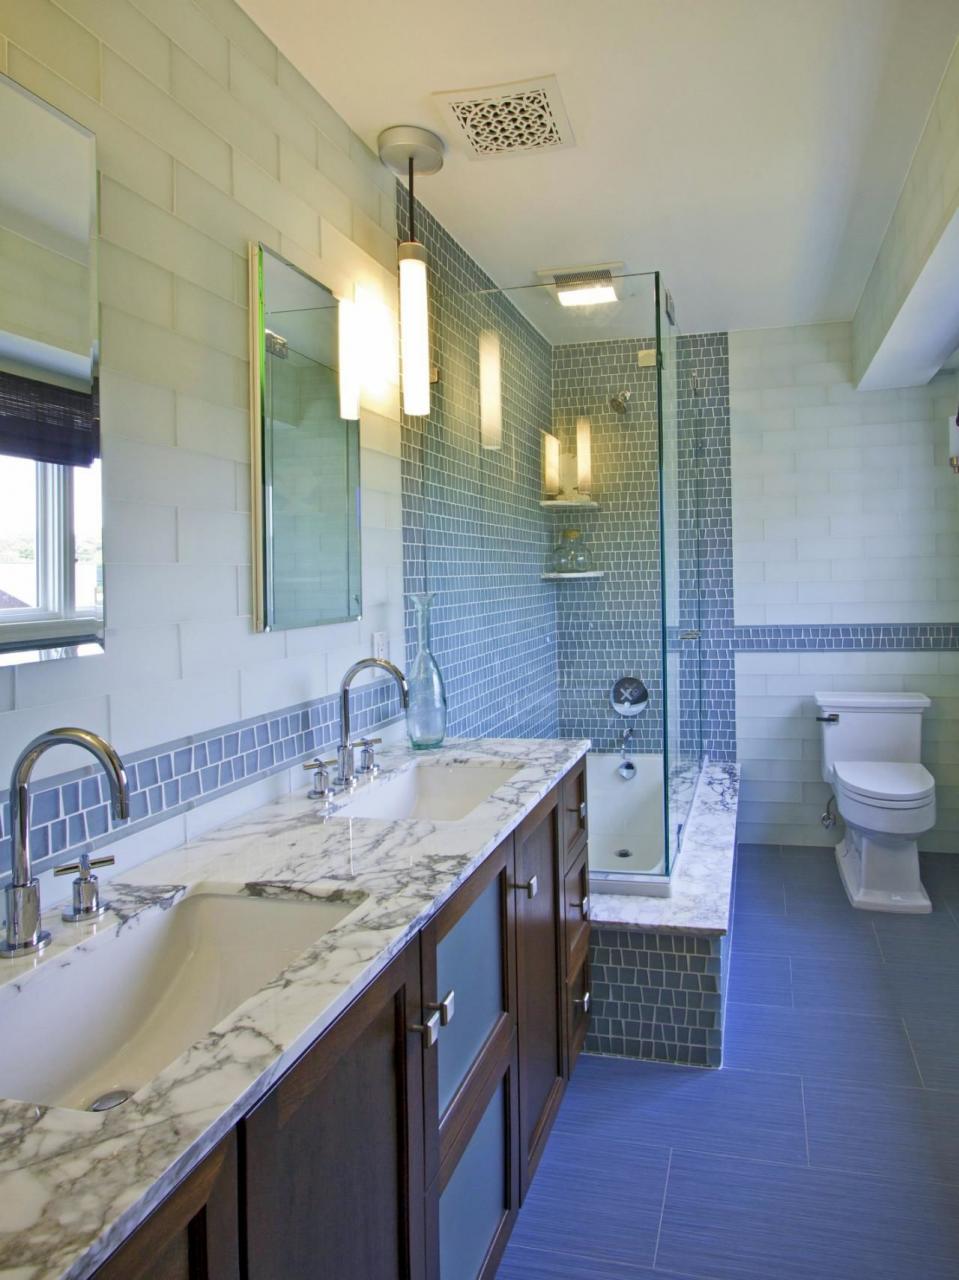 Contemporary Seafoam Green Bathroom Ideas Home Sweet Home